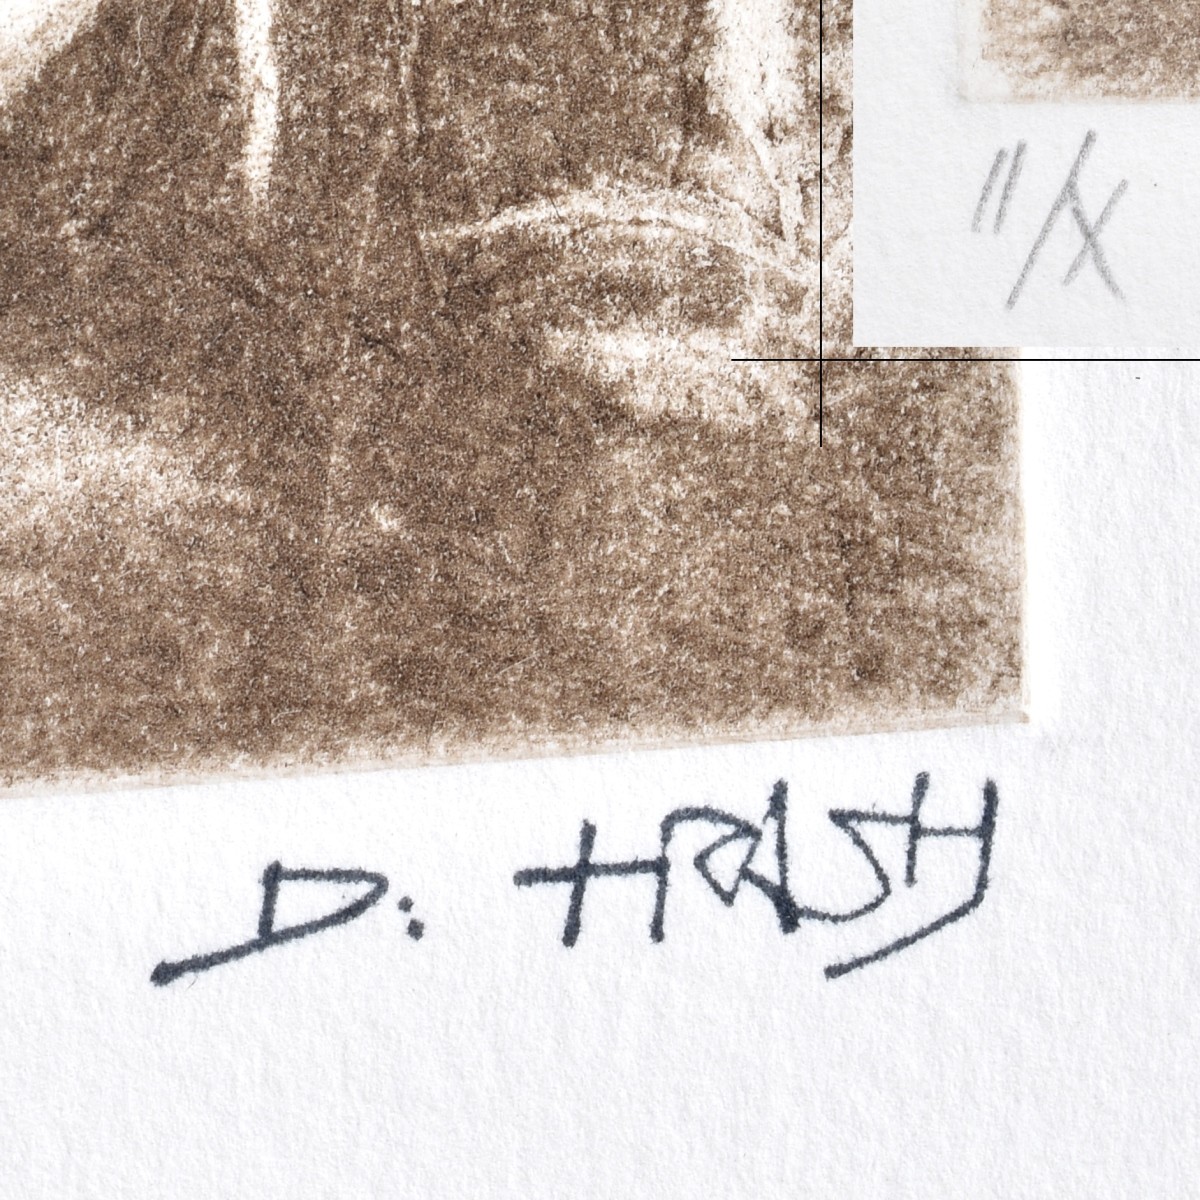 Dox Thrash, American (1893-1965) Mezzotint